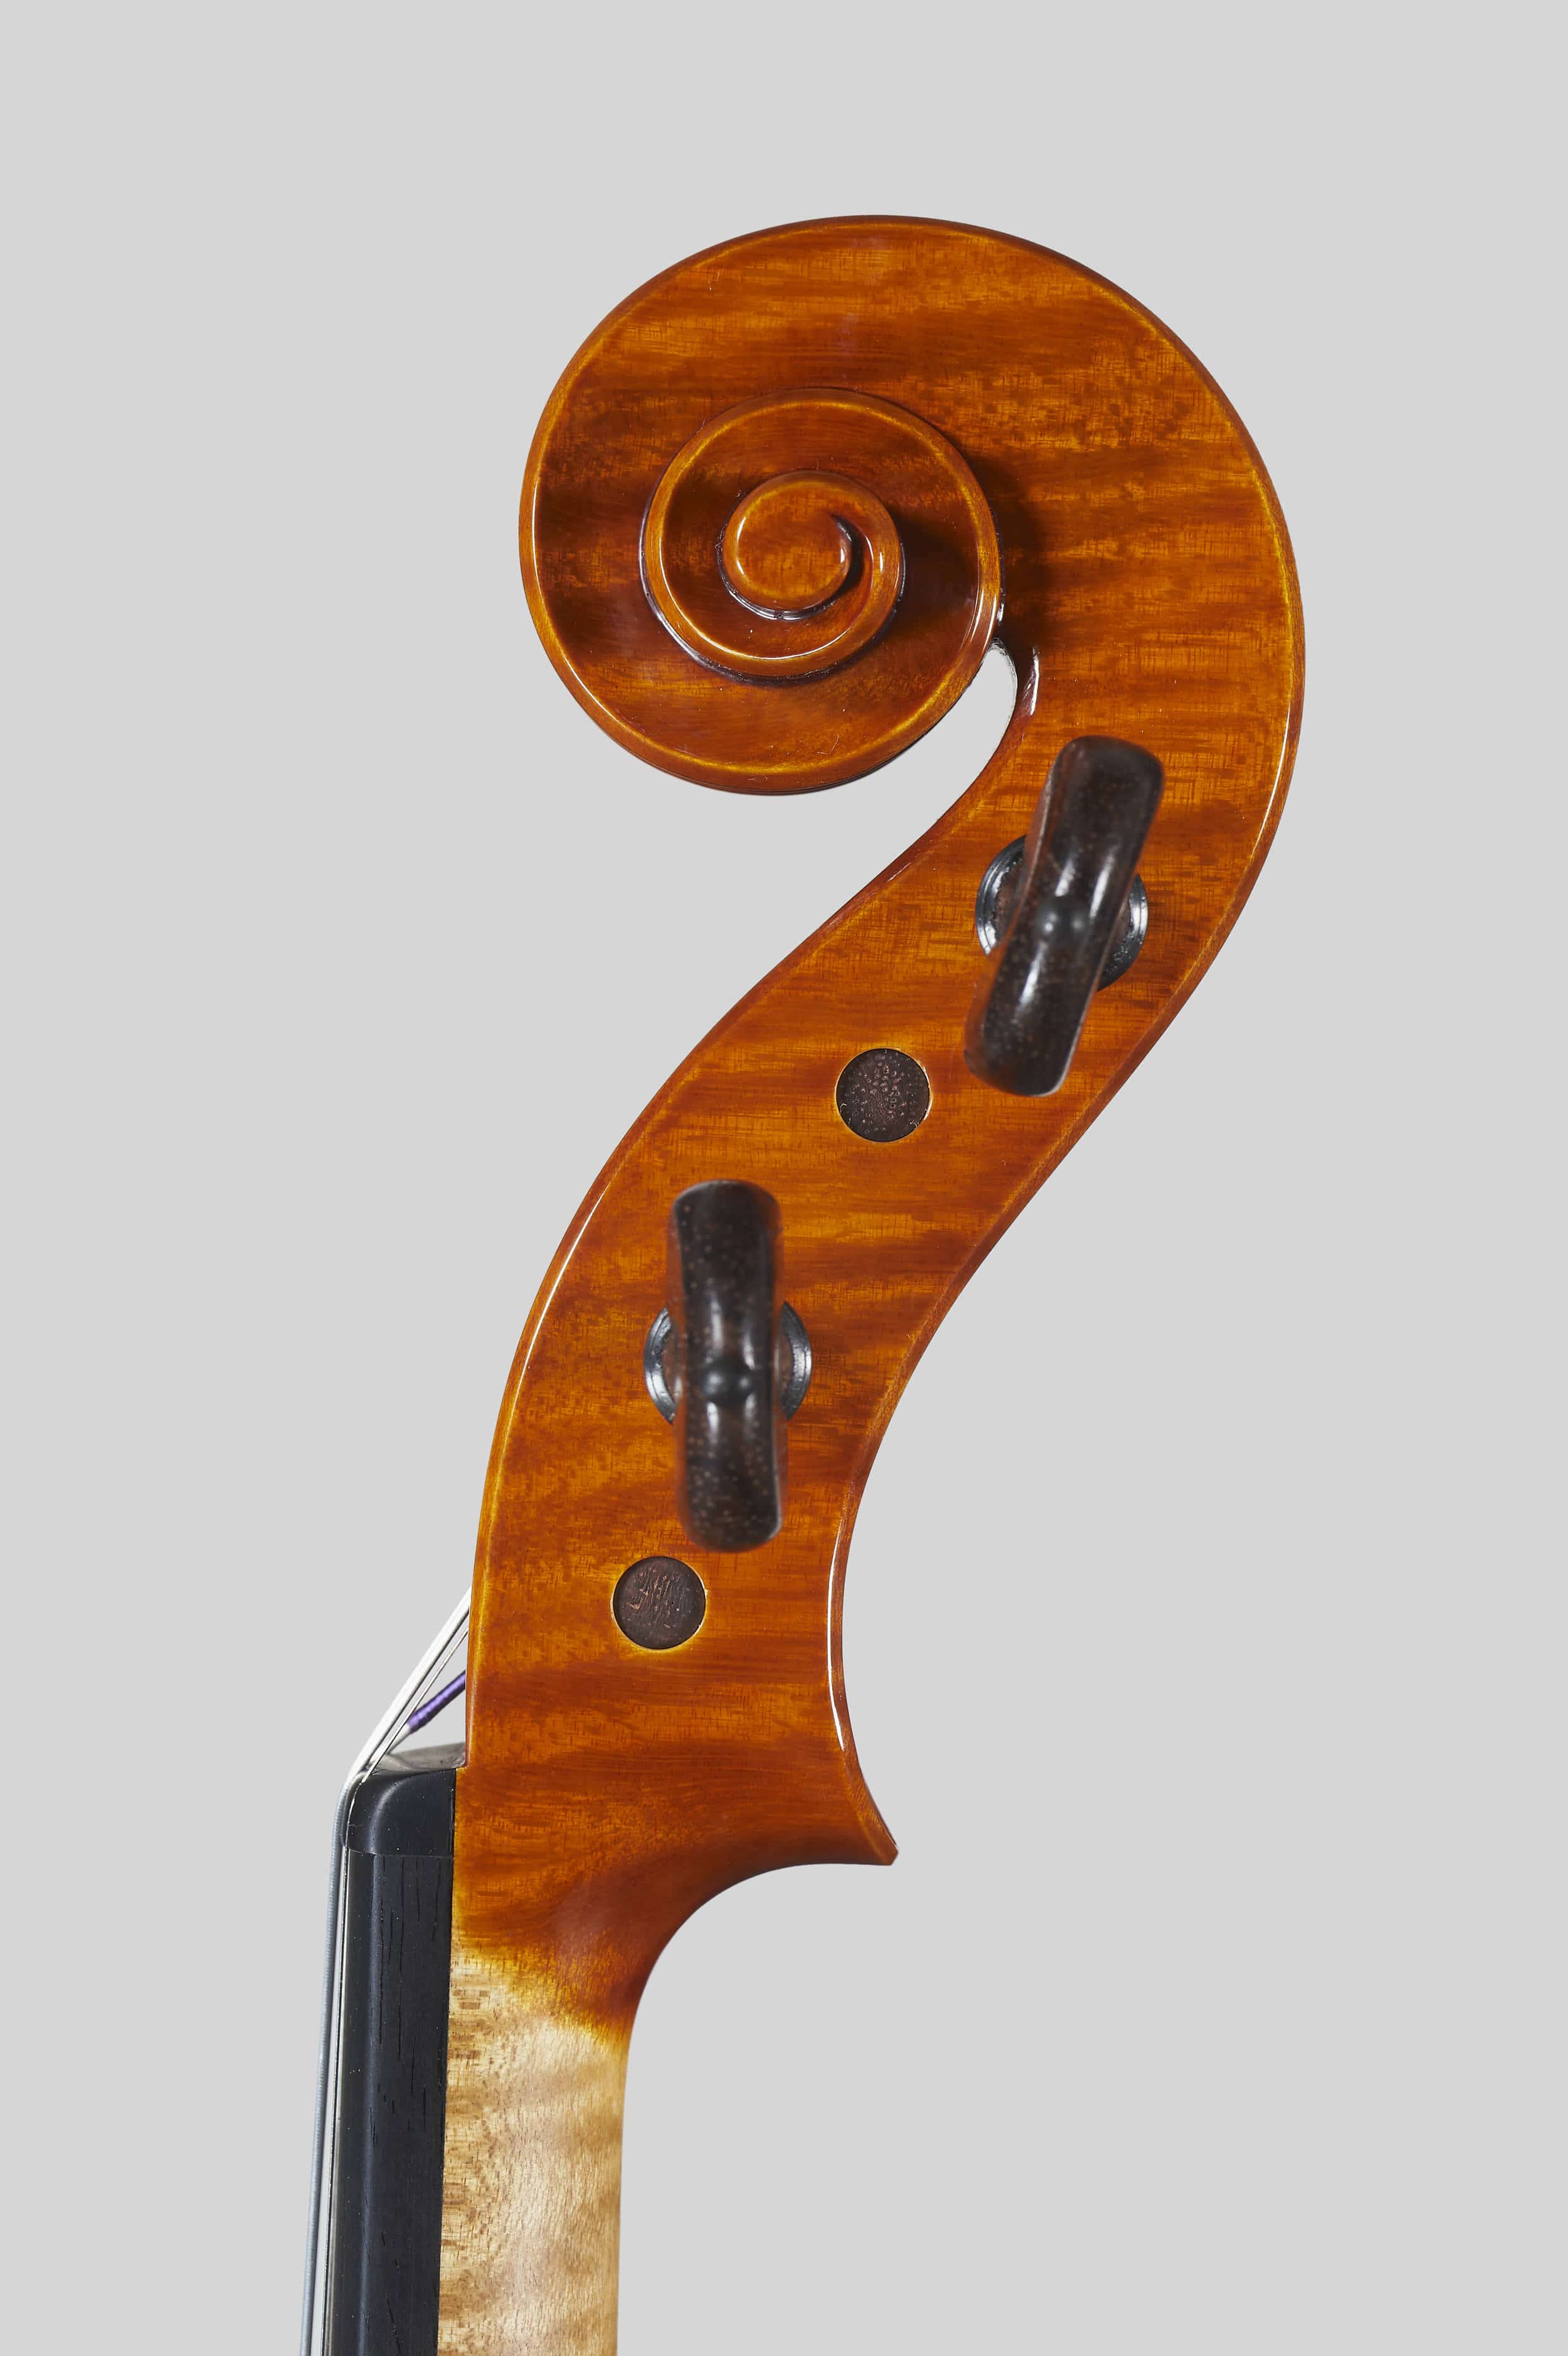 Anno 2016 - Violino modello A. Stradivari Rode, Le nestor 1733 - Testa destra